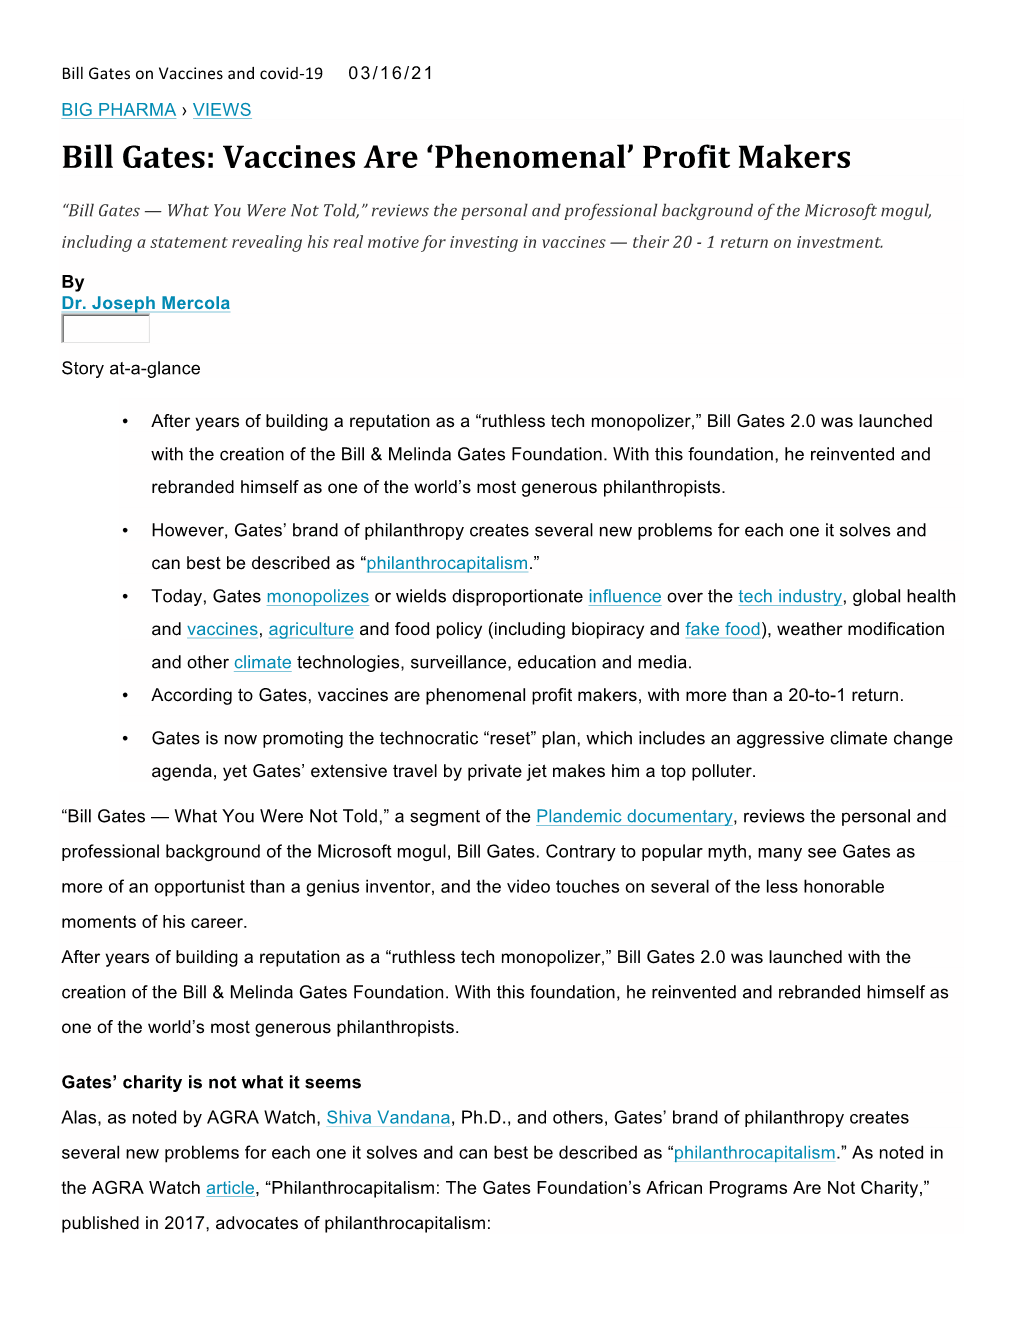 Bill Gates: Vaccines Are 'Phenomenal' Profit Makers